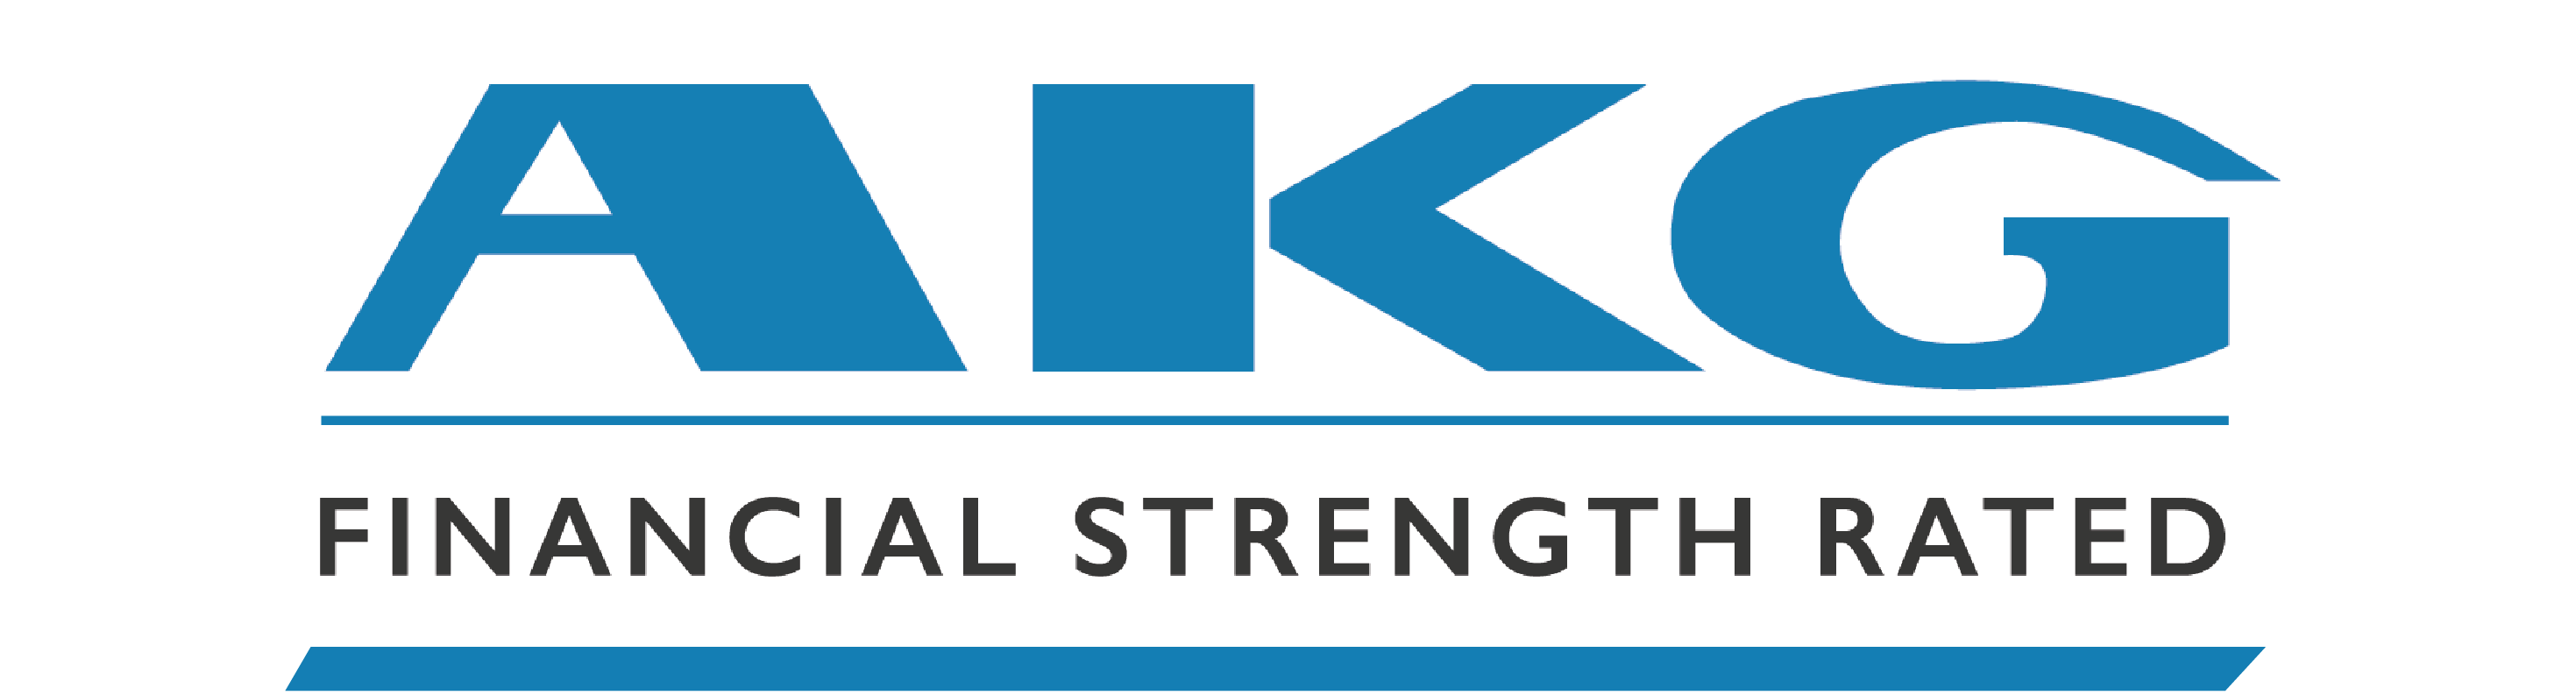 AKG financial strength award logo